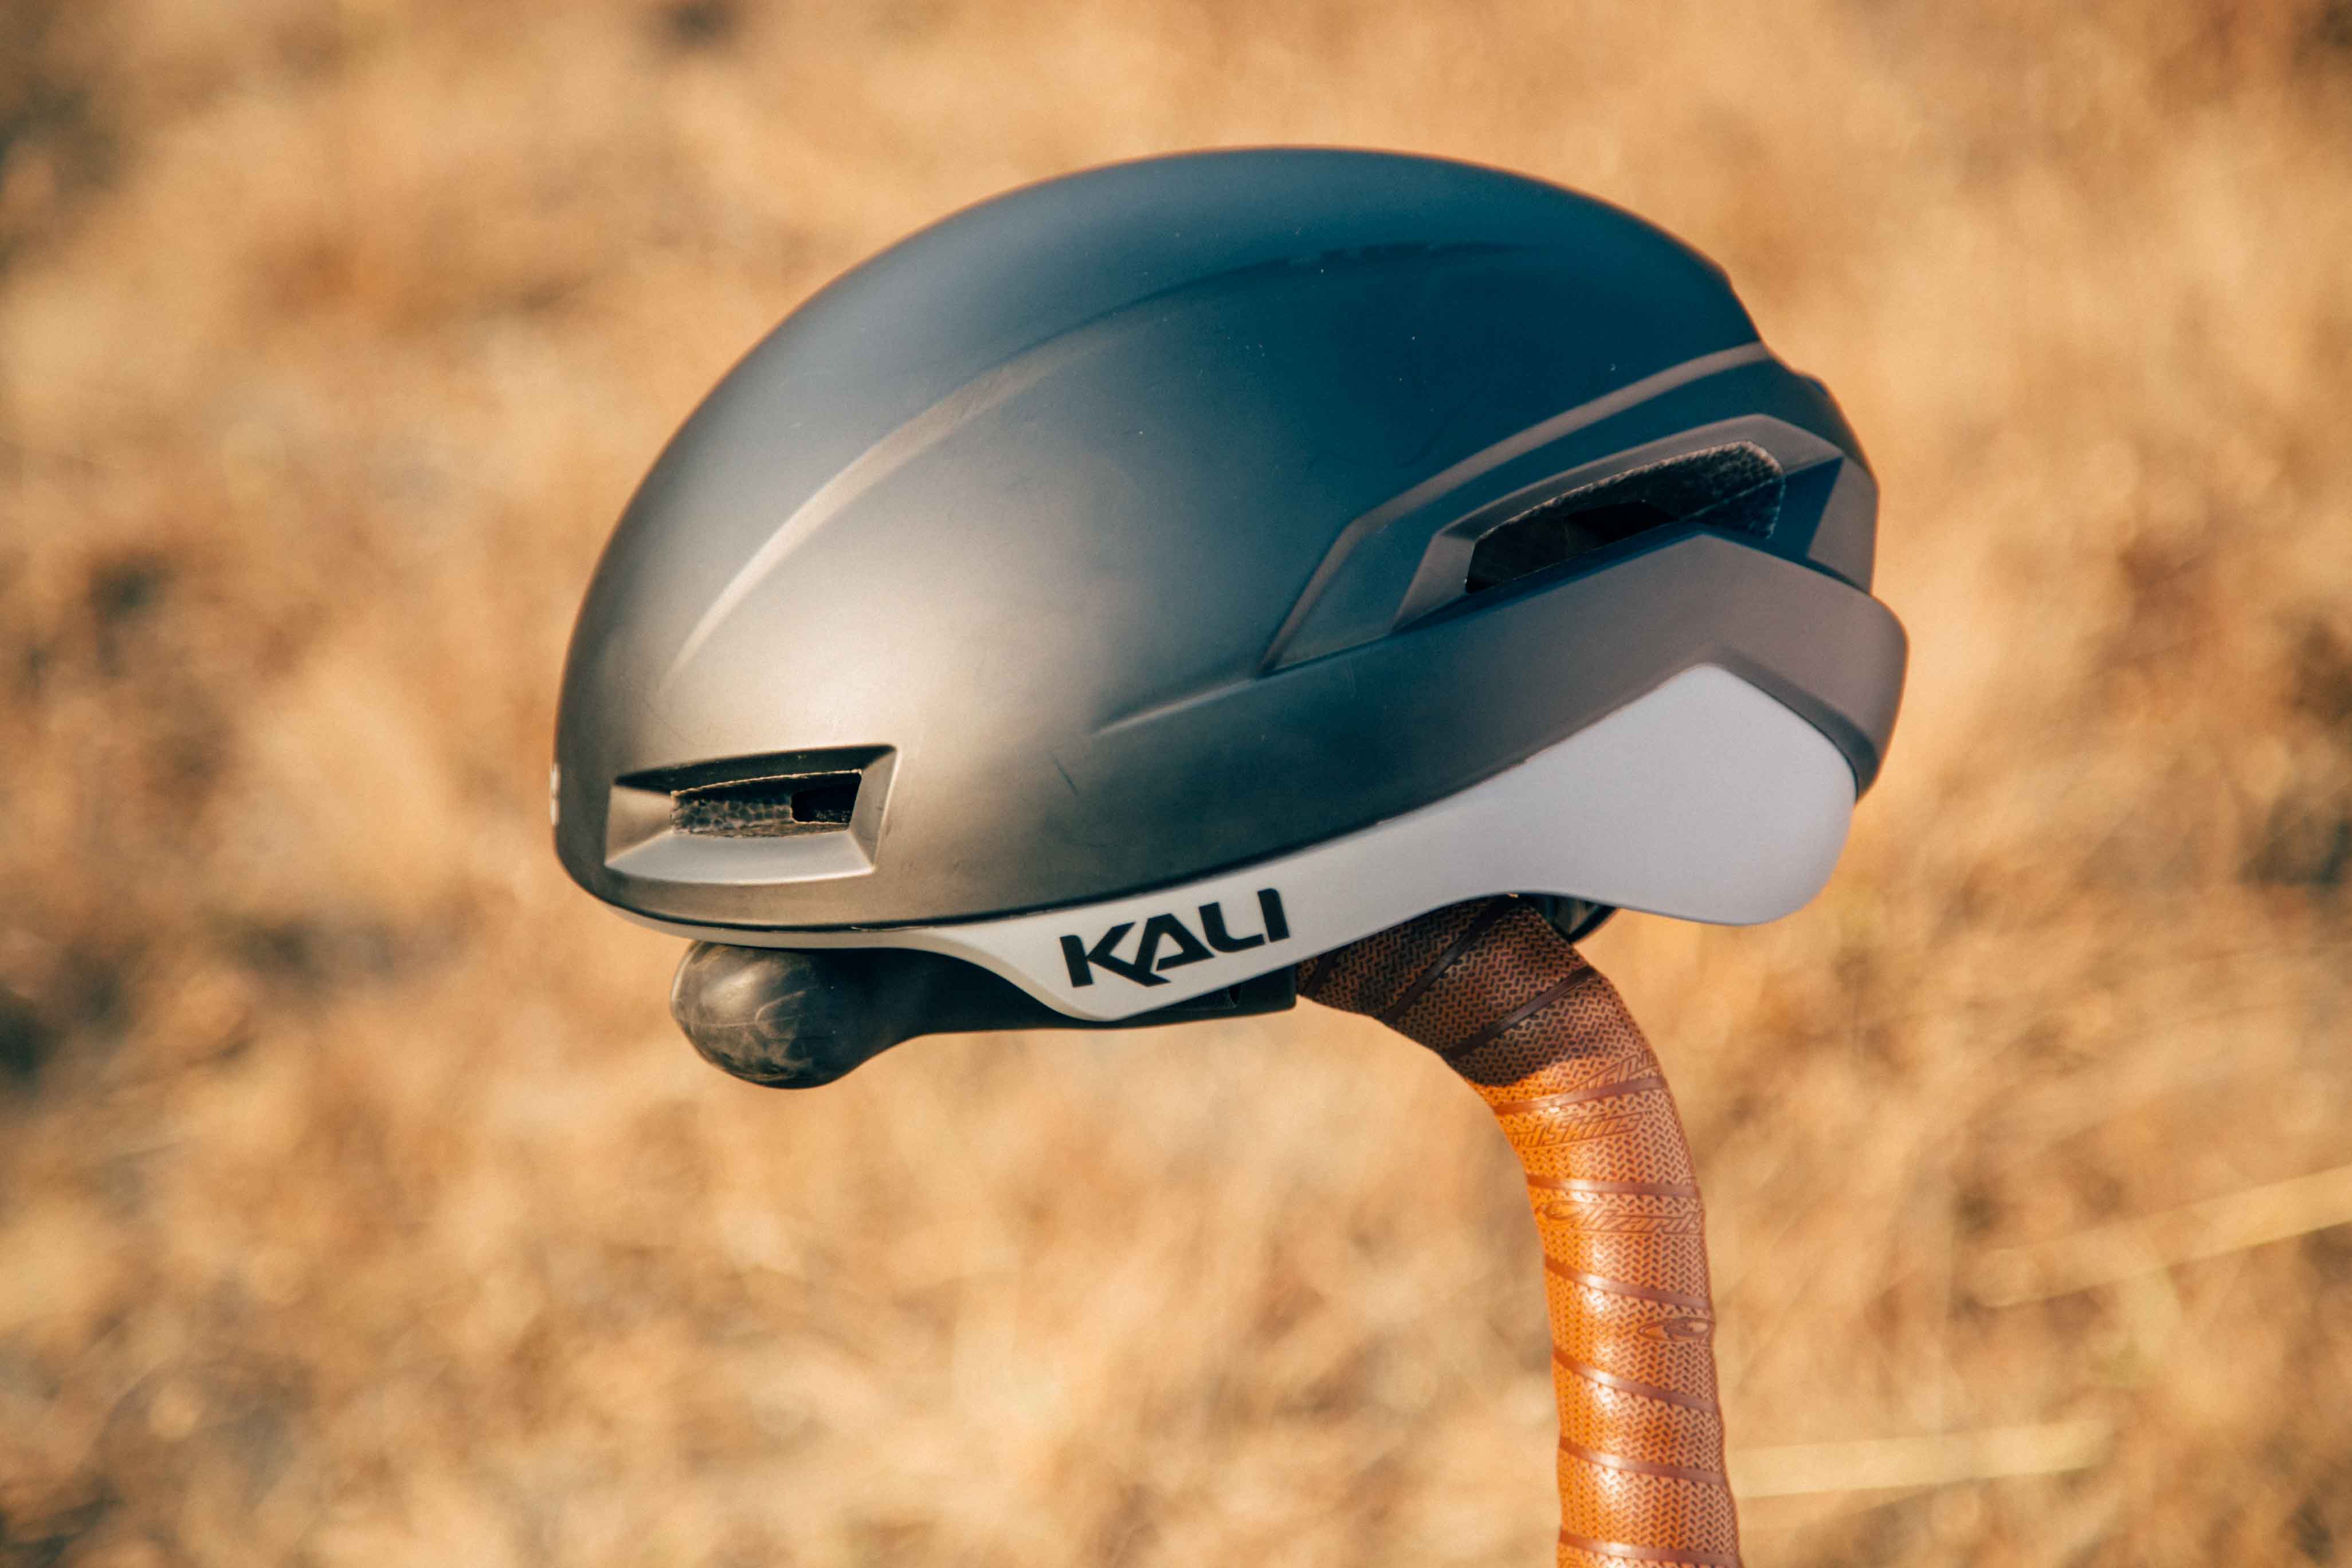 Kali's new aero road helmet to ship Dec. 7 Bicycle Retailer and